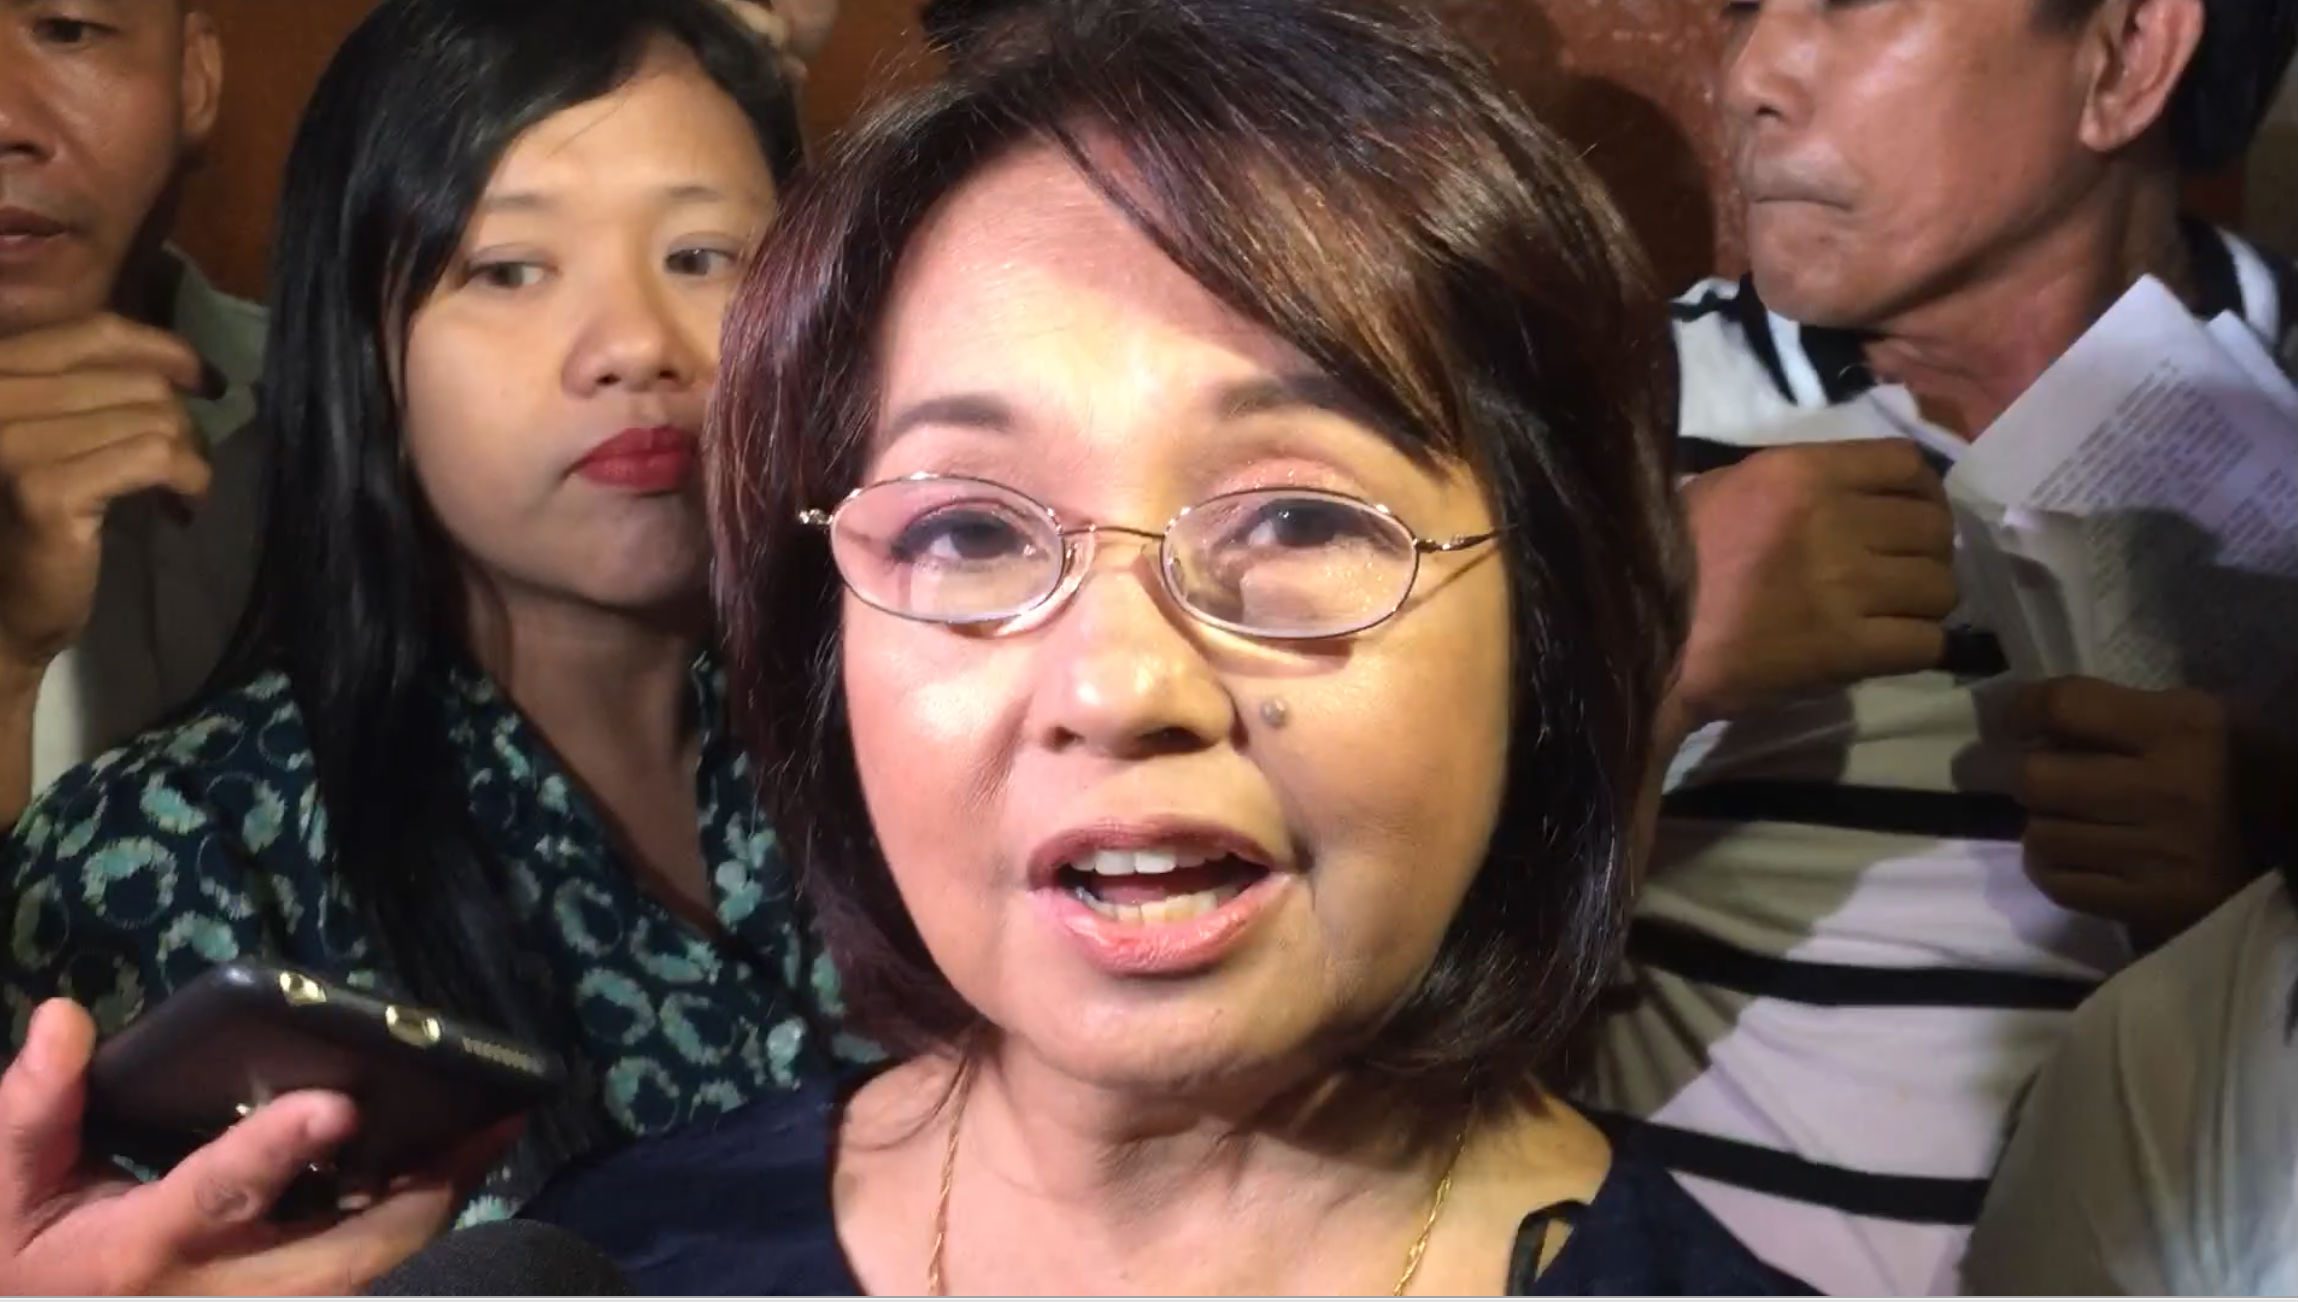 SC upholding acquittal in plunder case a ‘vindication’ for Arroyo